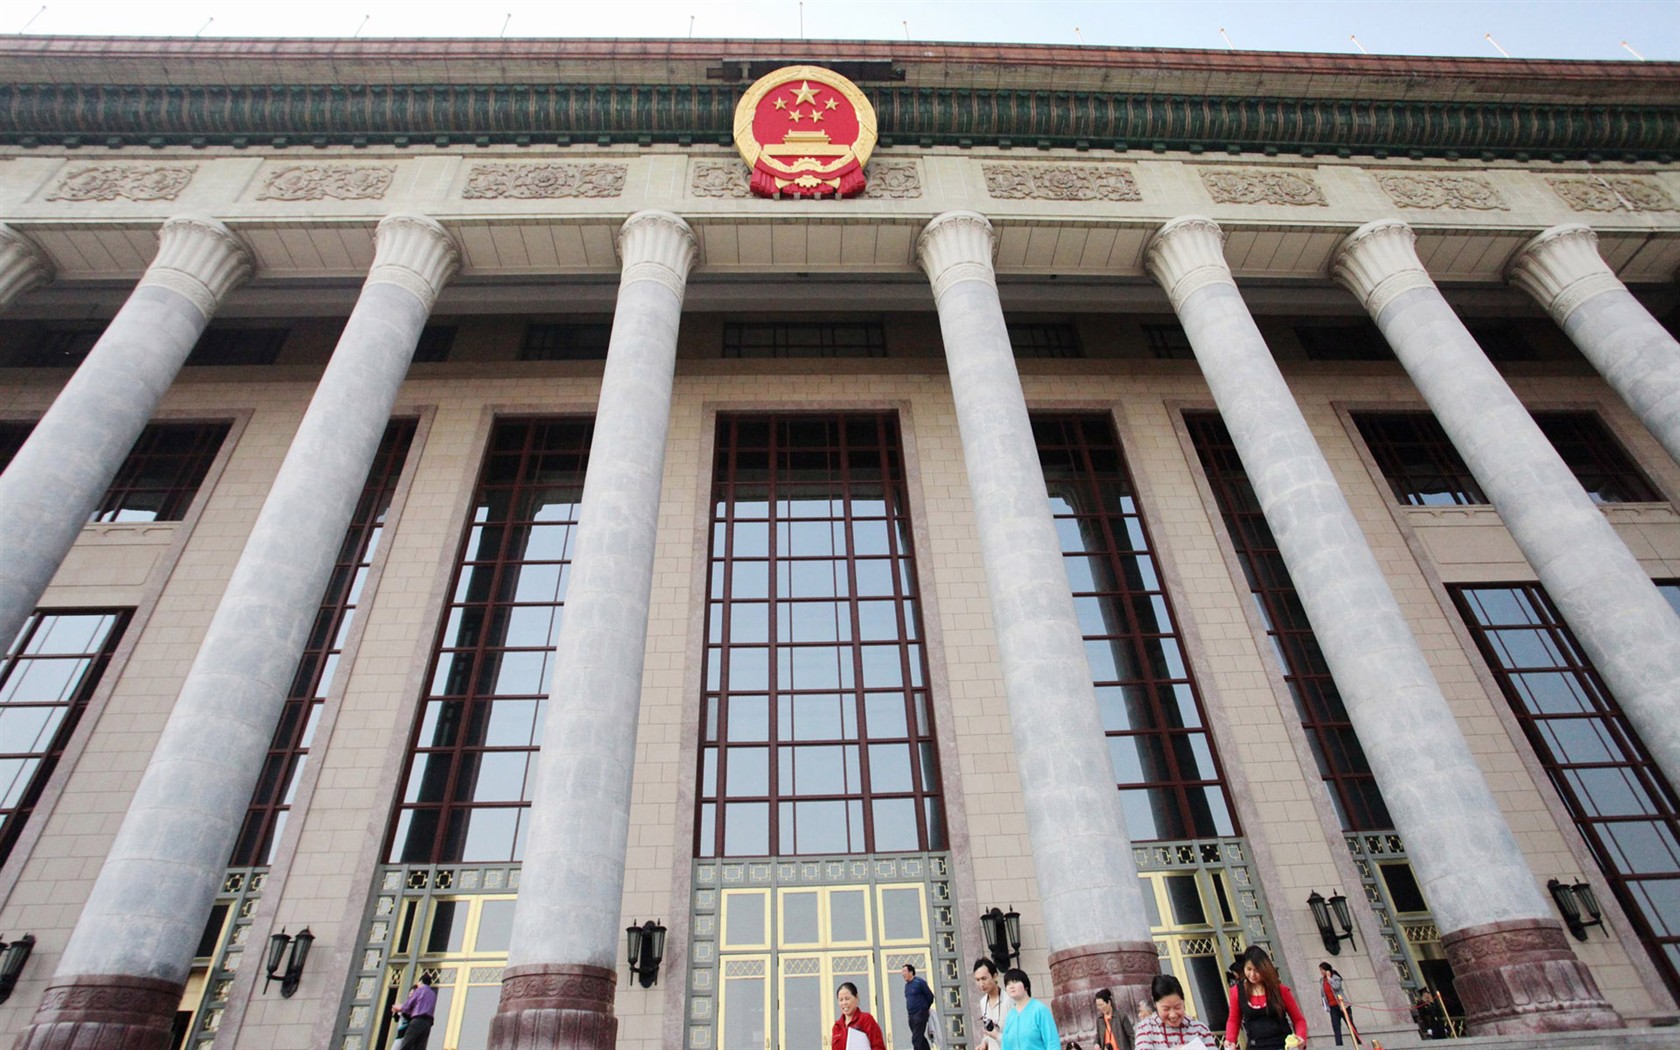 Beijing Tour - Great Hall (ggc works) #14 - 1680x1050